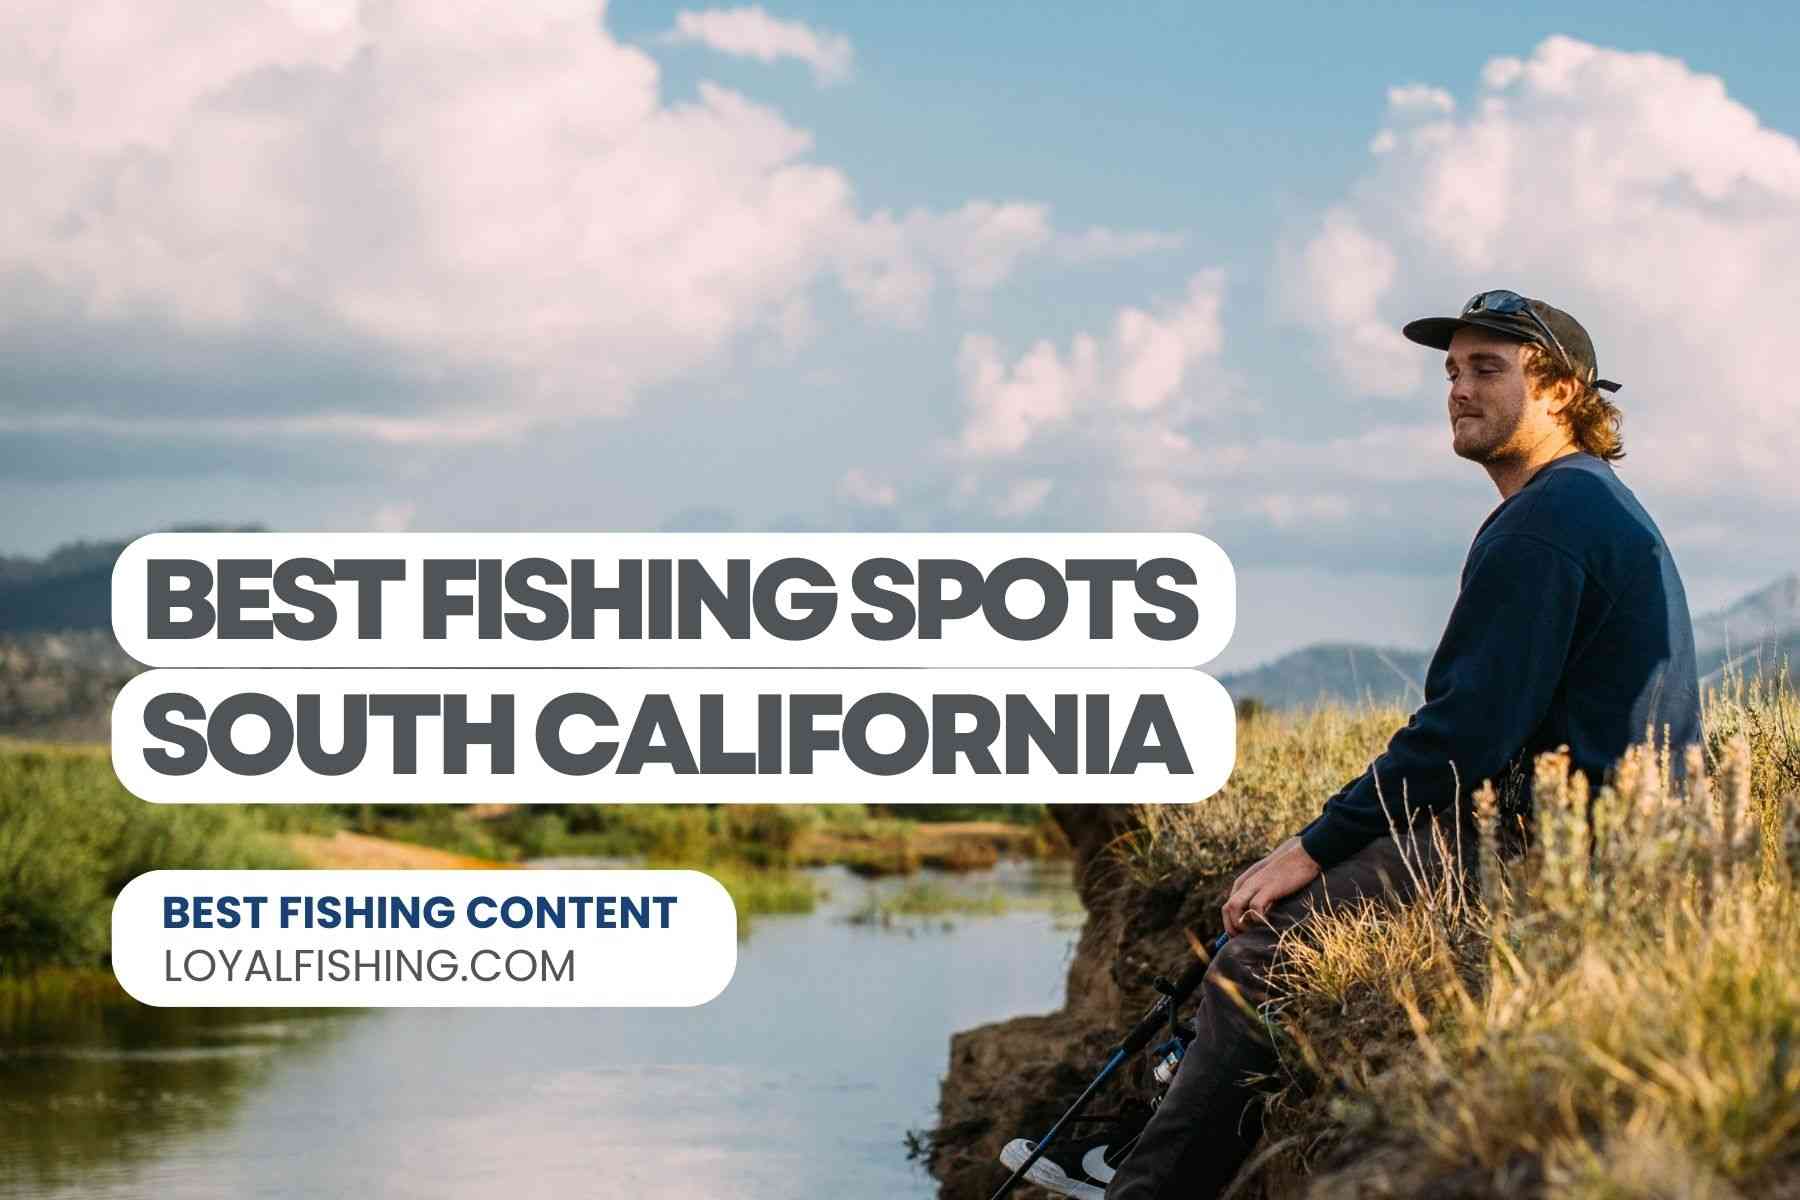 Best Fishing Spots - South California